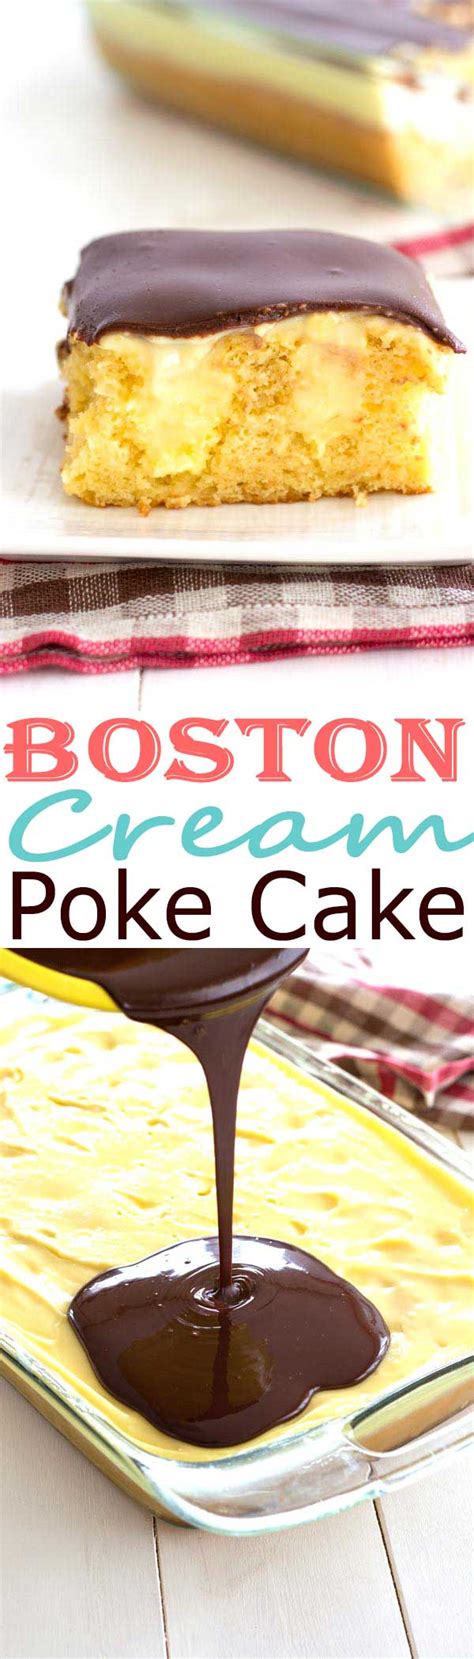 I can't wait to try it! Boston Cream Poke Cake - Kitchen Gidget